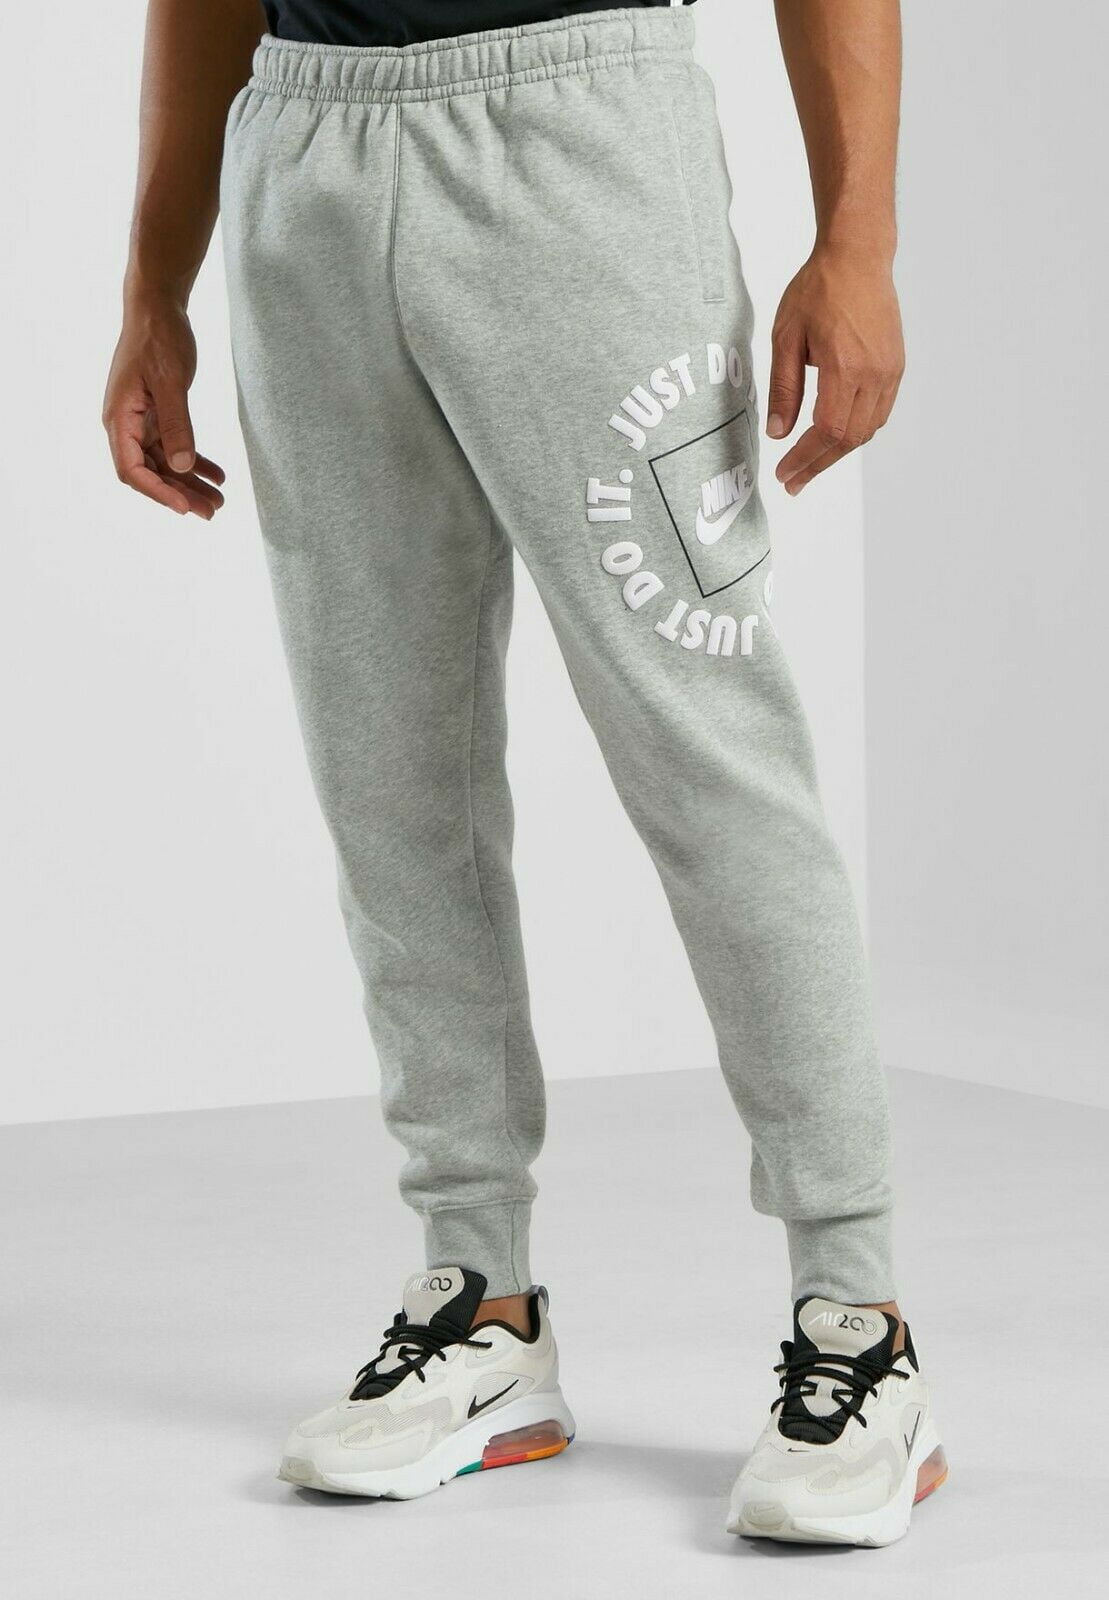 morgen Dwaal charme Nike Men's Sportswear JDI Gray/White Sweatpants Size S - Walmart.com